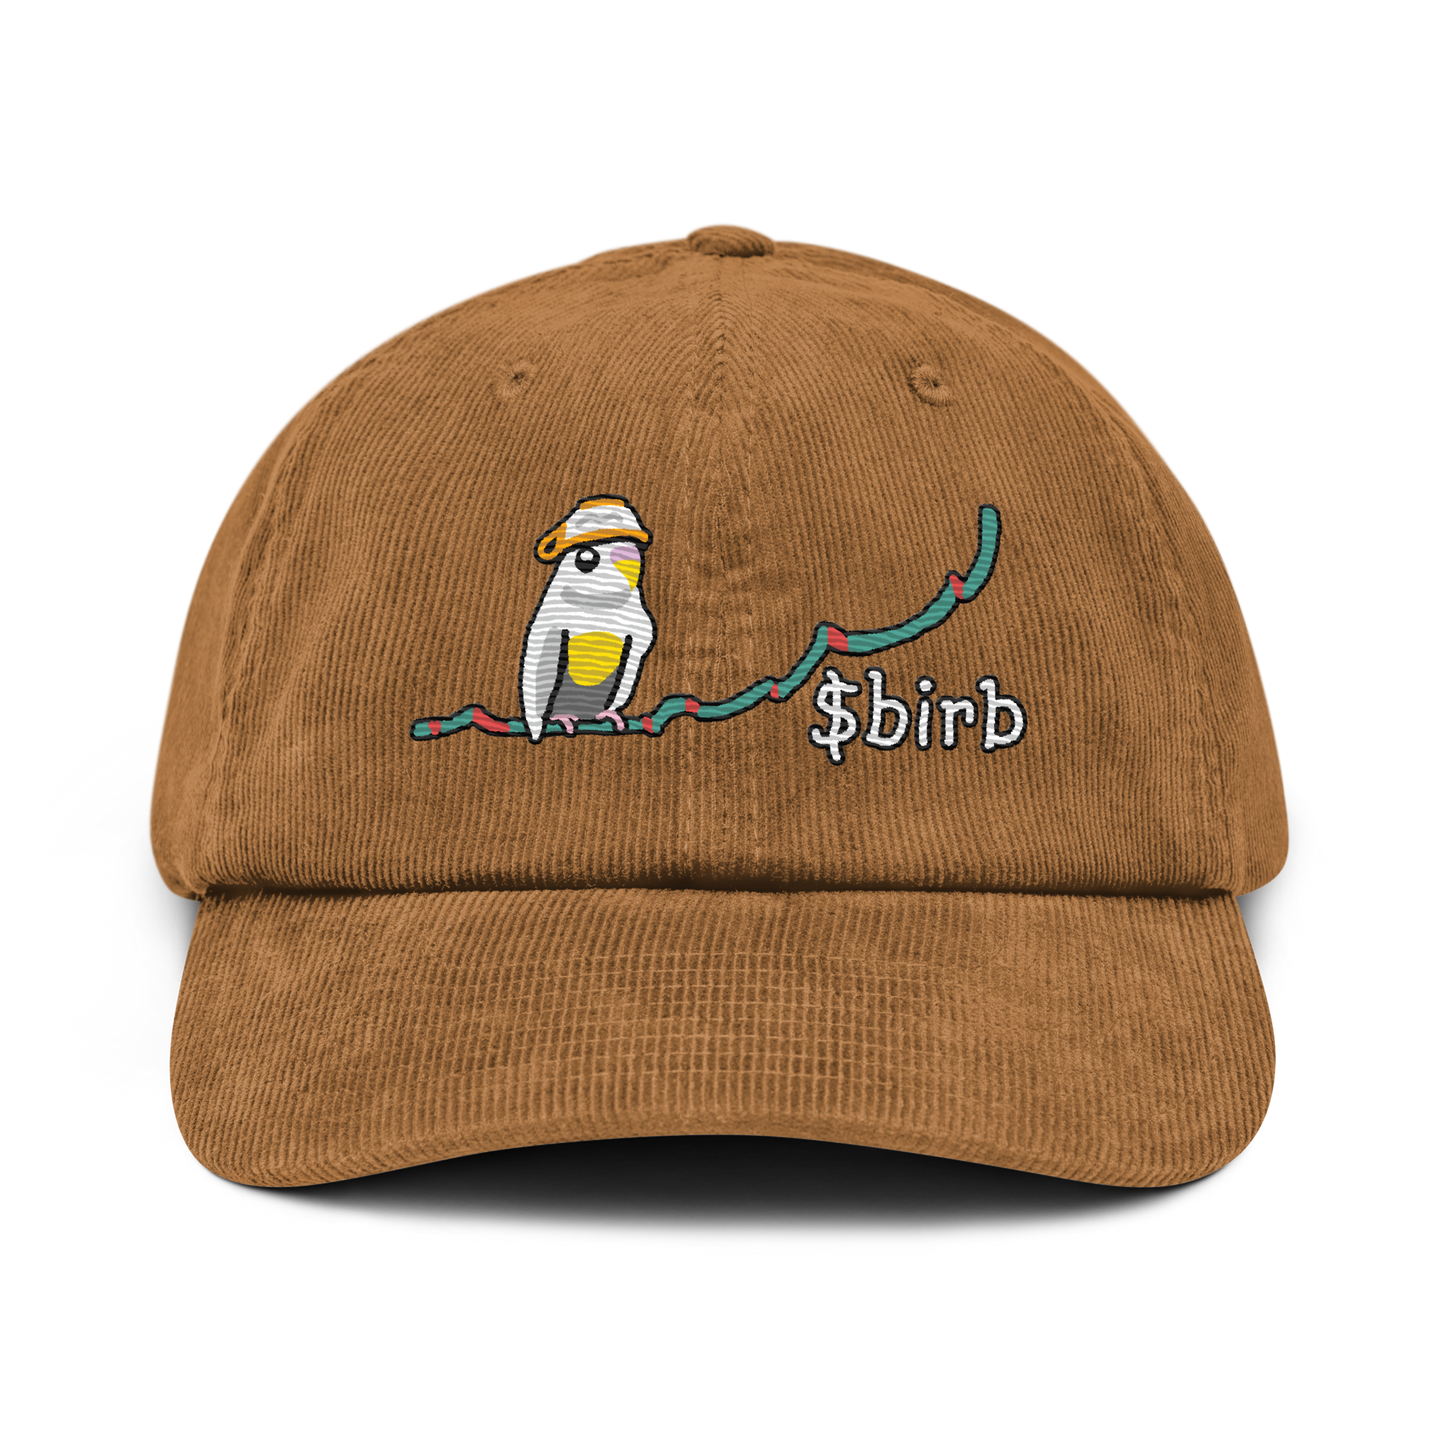 $BIRB CORDUROY HAT